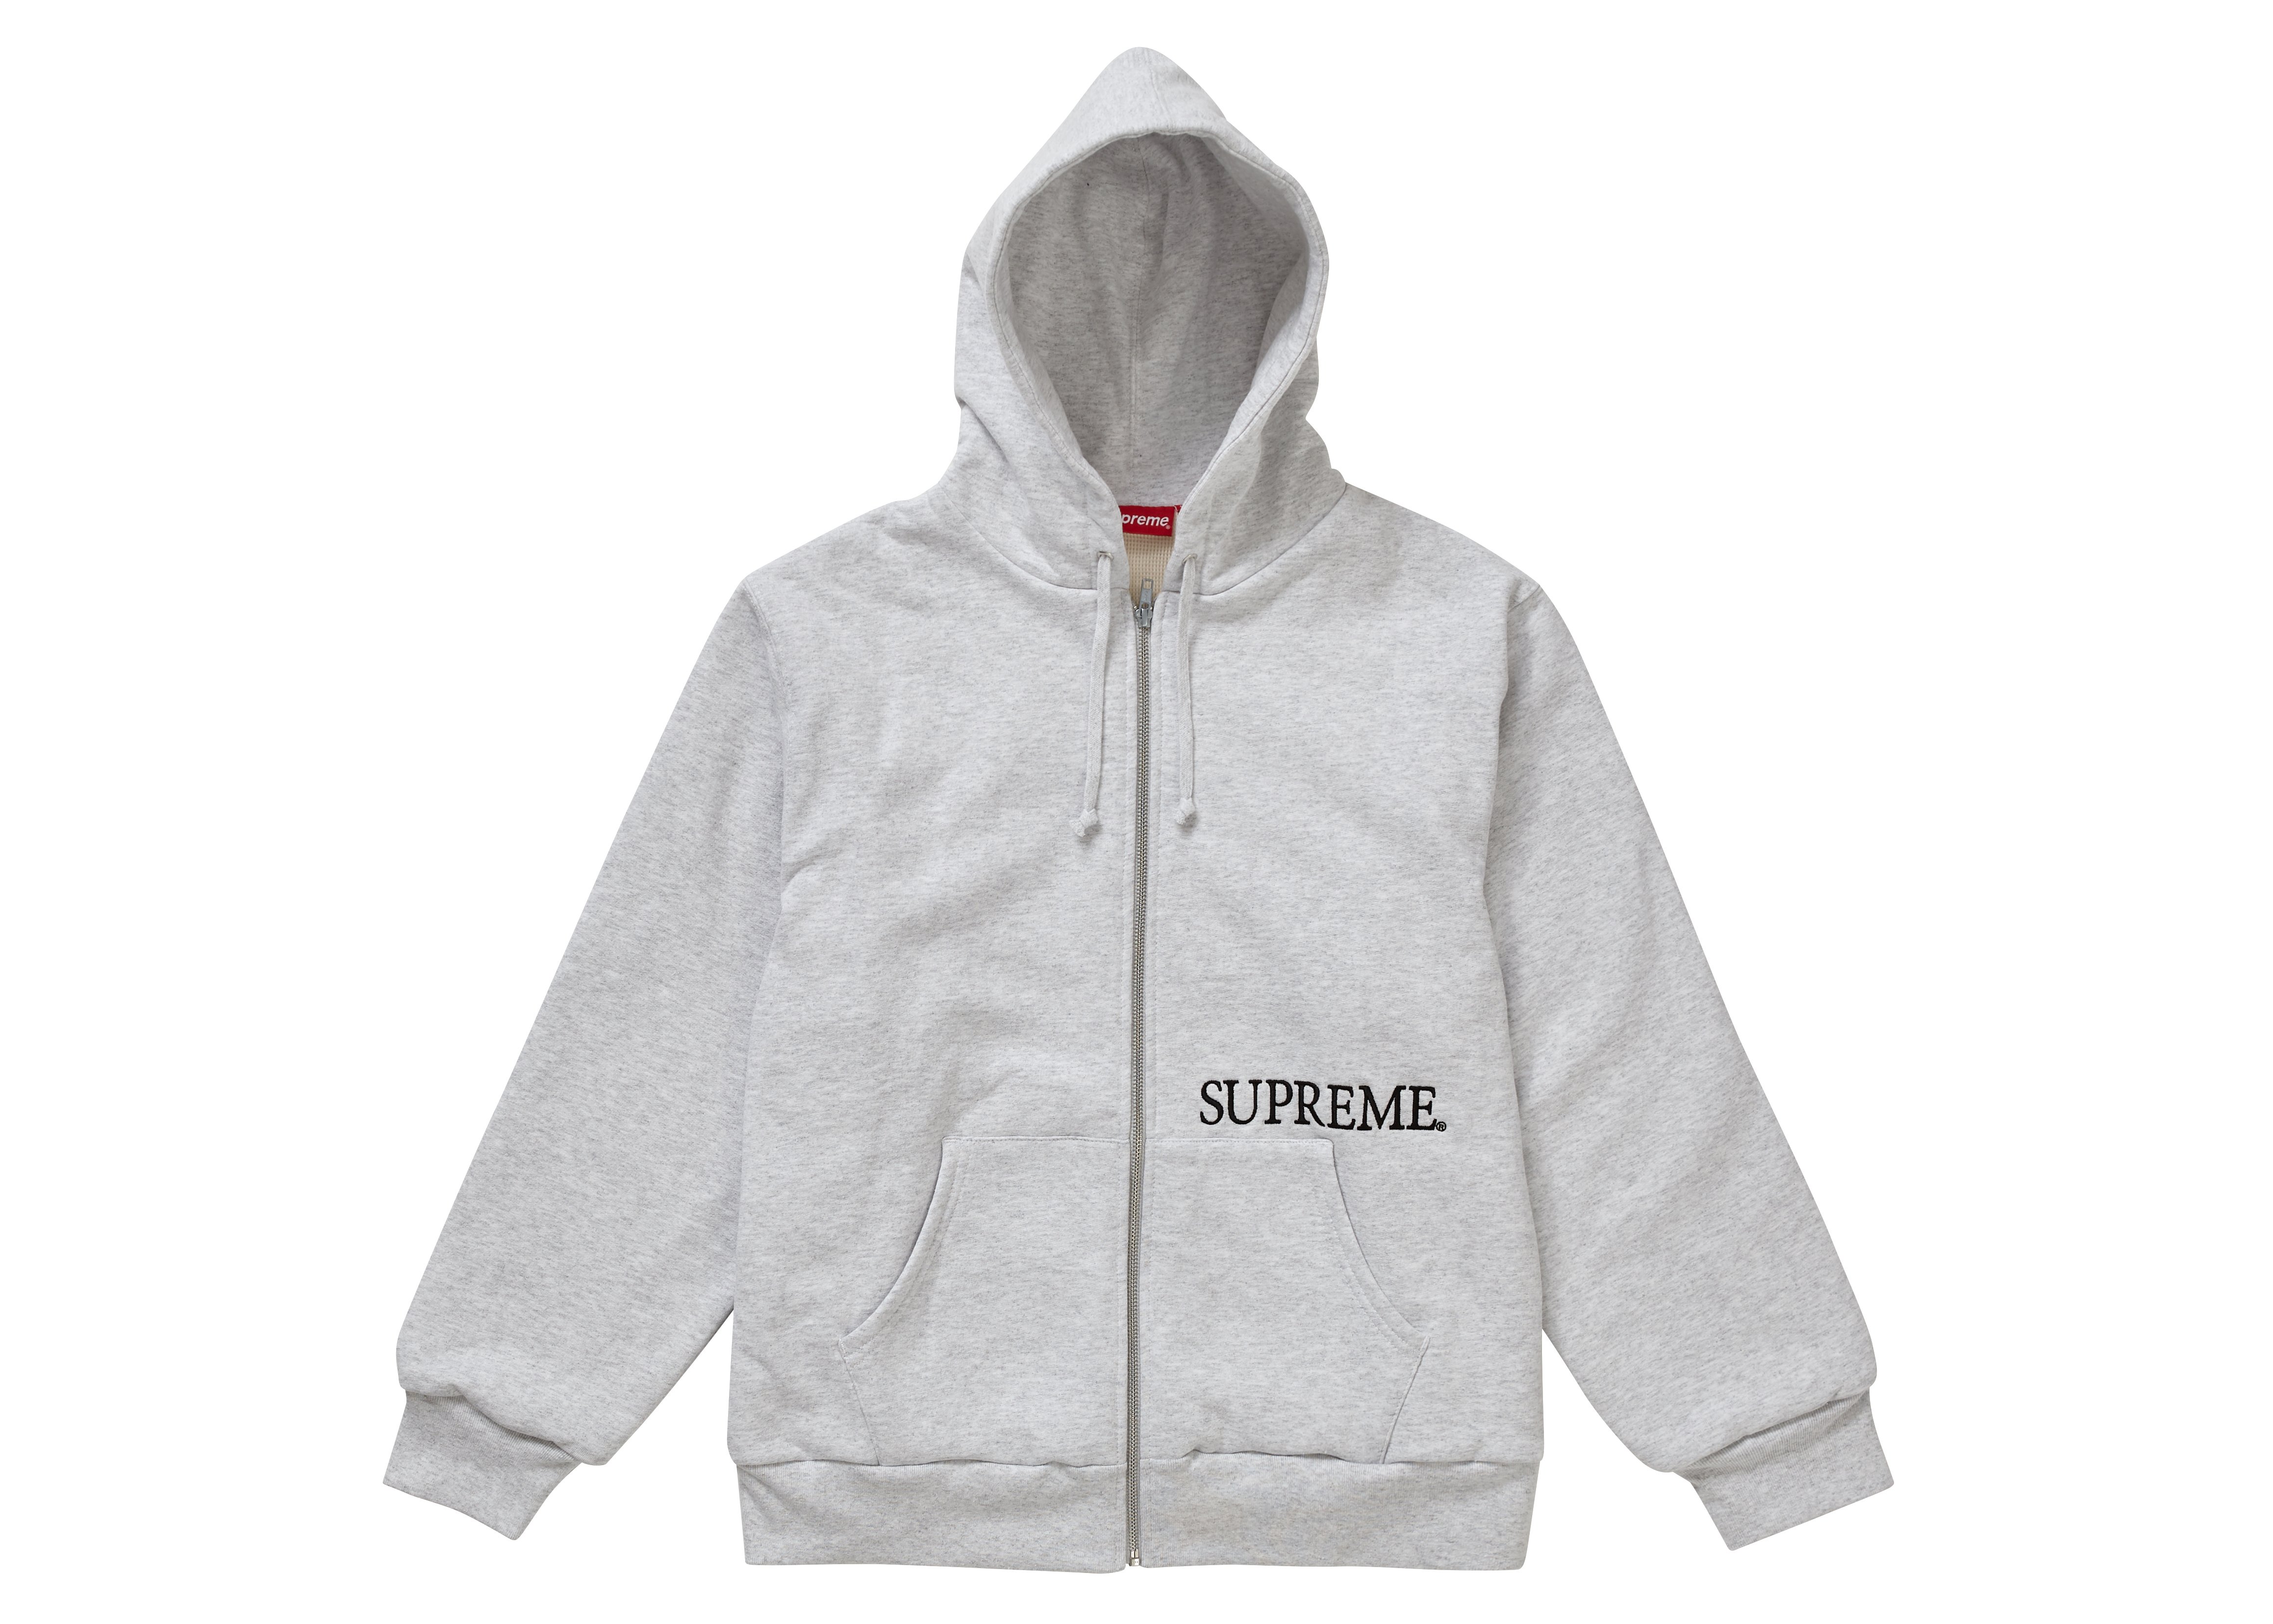 Supreme Thermal Zip Up Hooded Sweatshirt Ash Grey - FW19 Men's - US